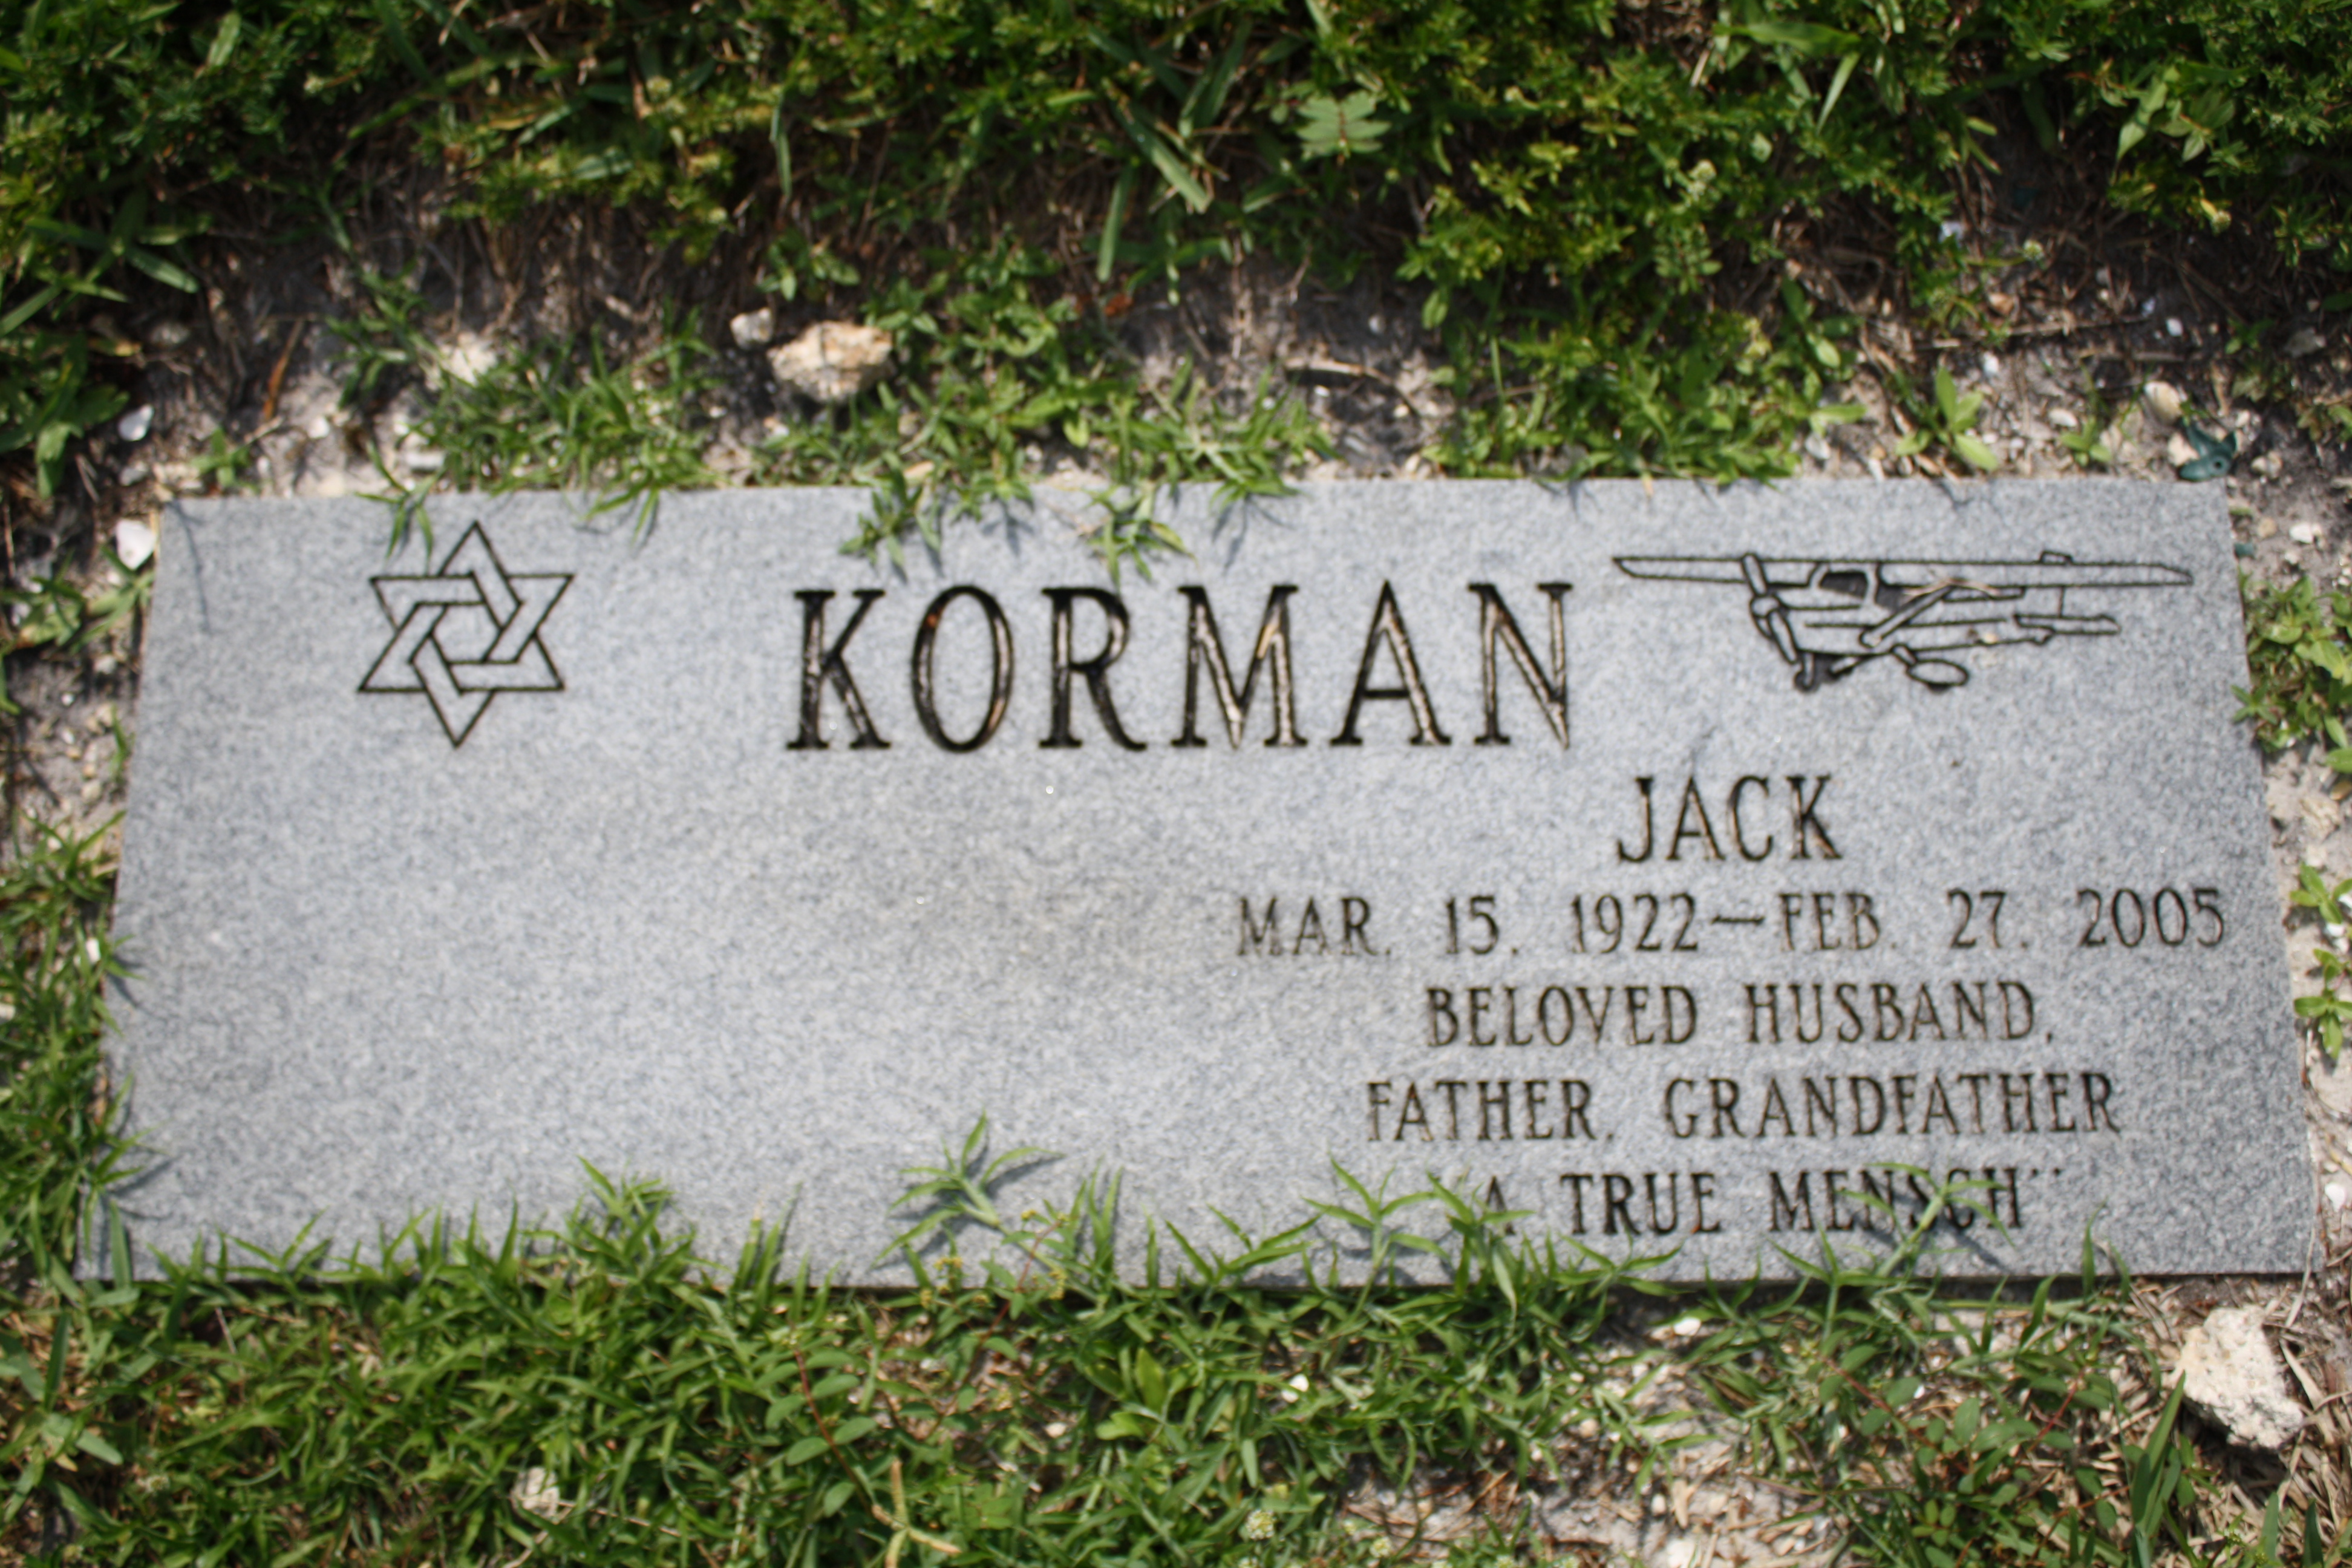 Jack Korman